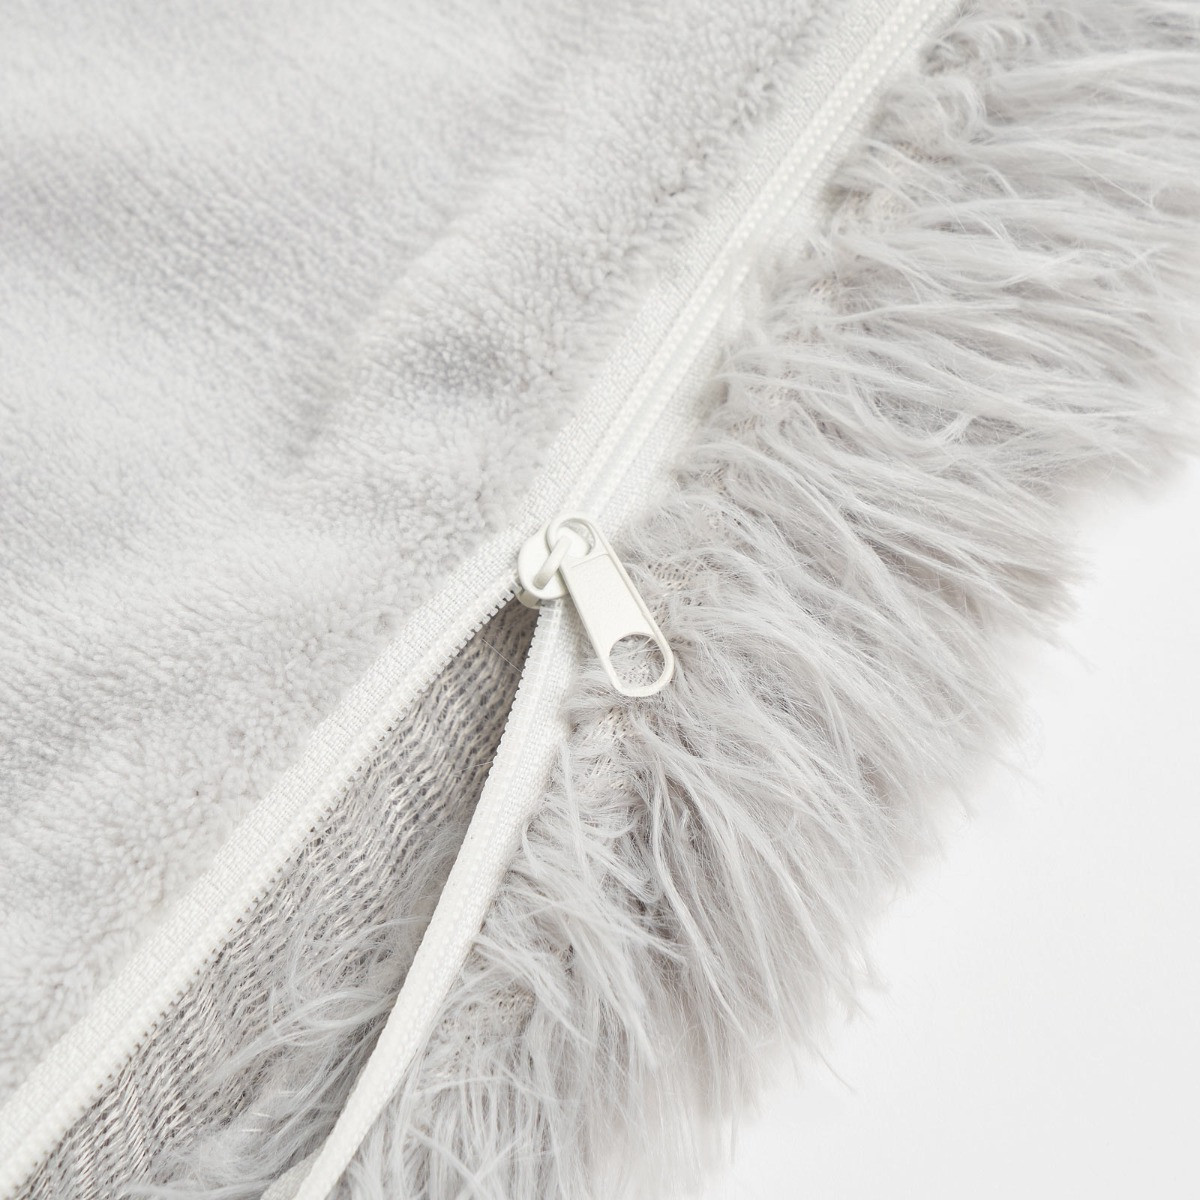 Sienna Fluffy Cushion Covers - Silver>